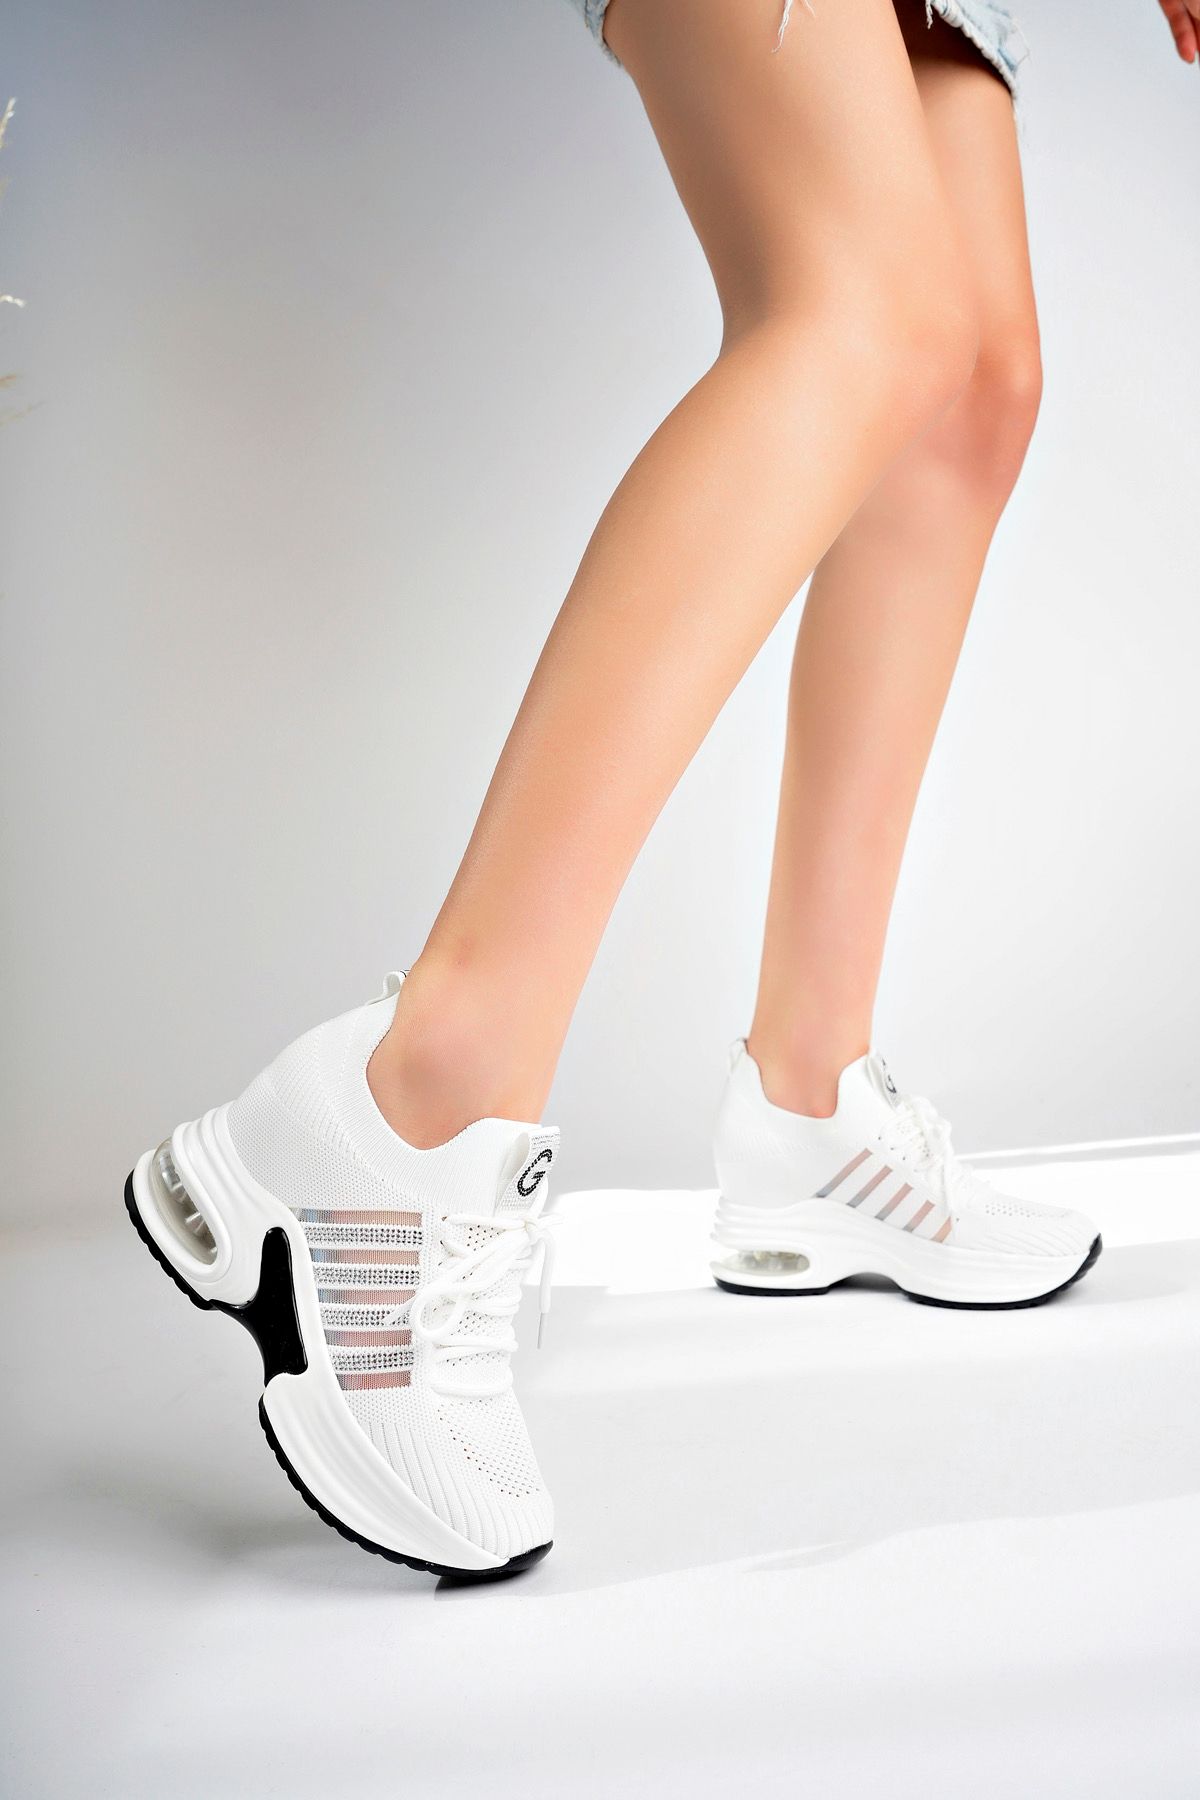 Guja Guja Kadın İthal Örme Triko Gizli Dolgu Topuk Sneakers